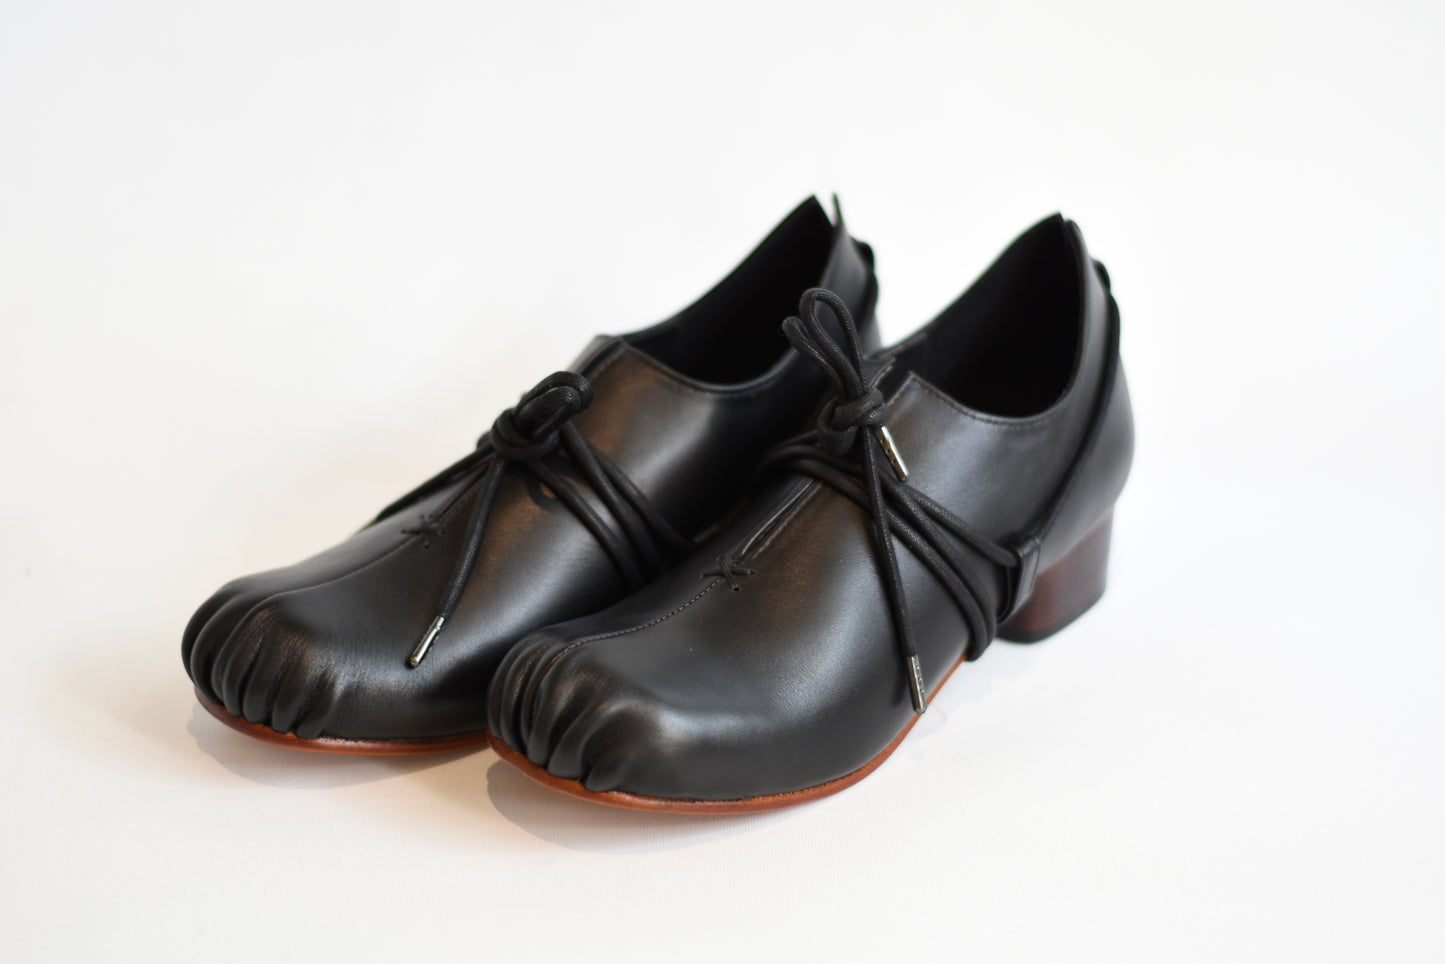 The Foundry Shoe - Black, no more heel slip